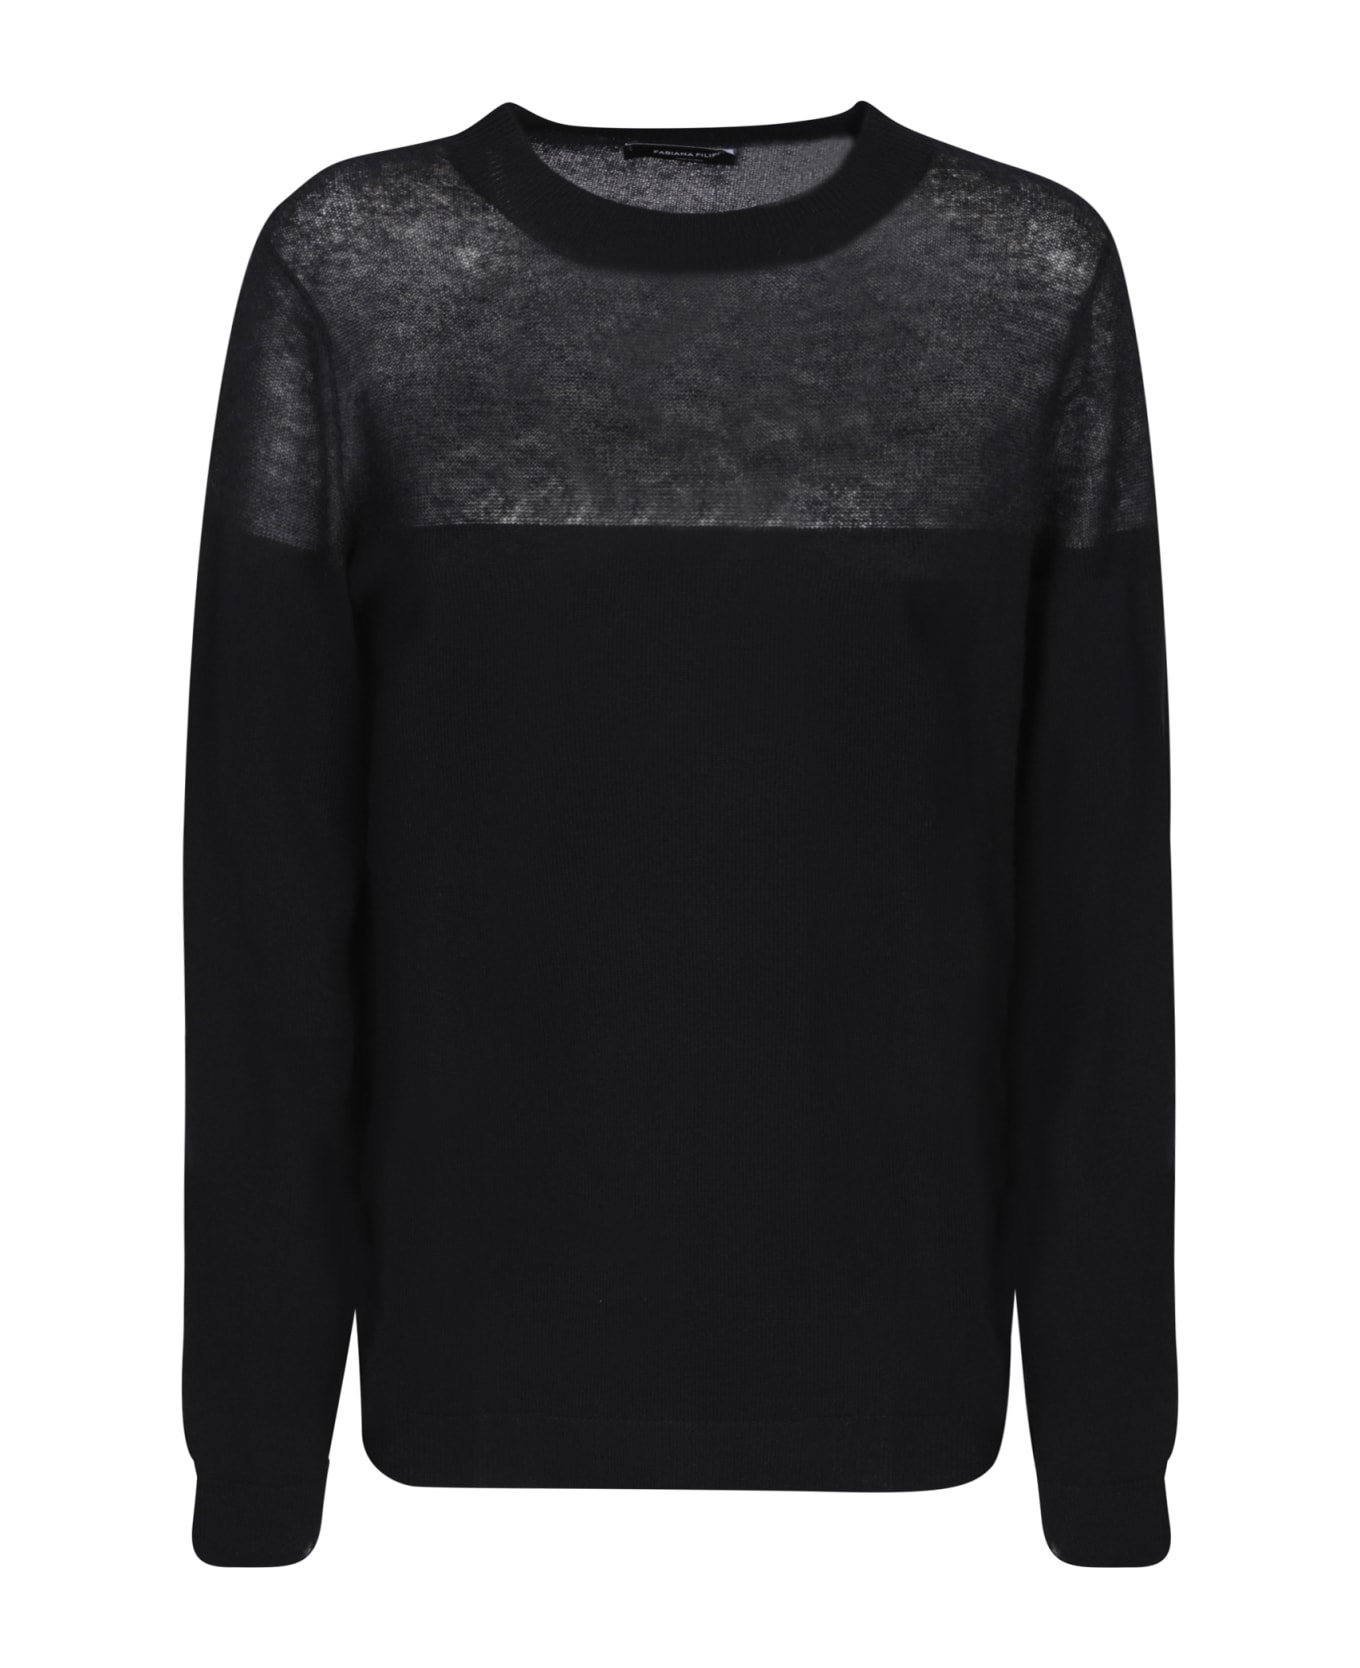 Fabiana Filippi Premium Yarn Black Sweater - Black